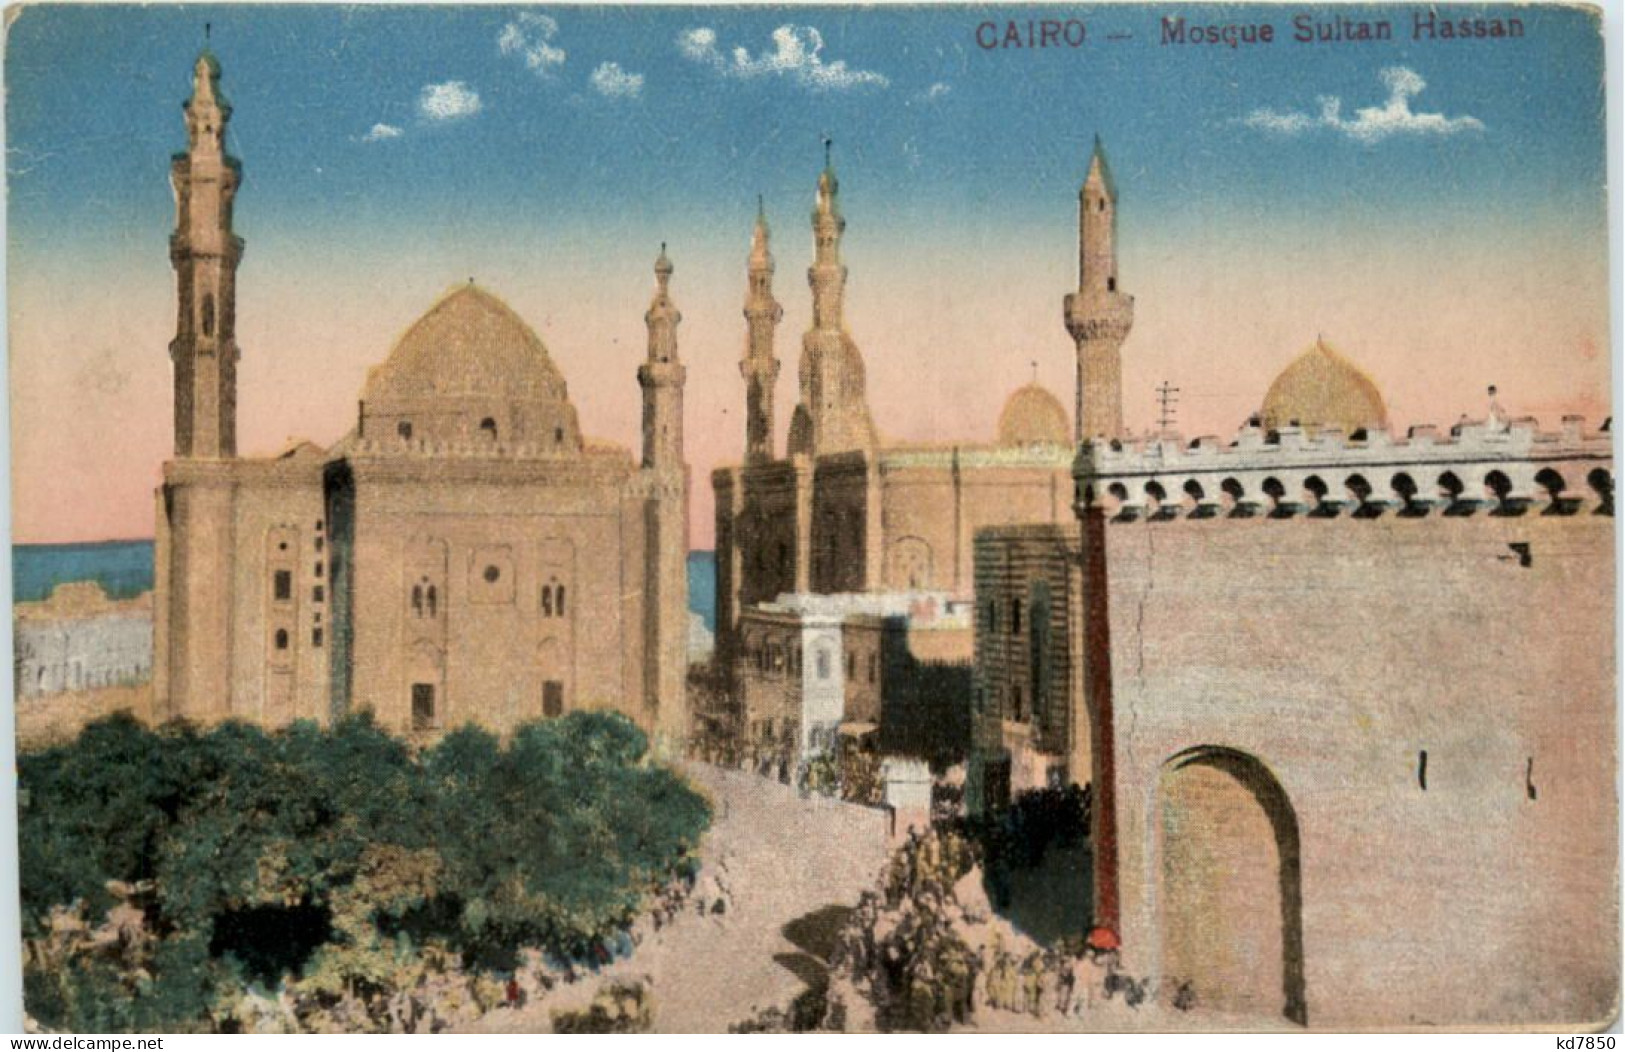 Cairo - Mosque Sultan Hassan - Alexandria